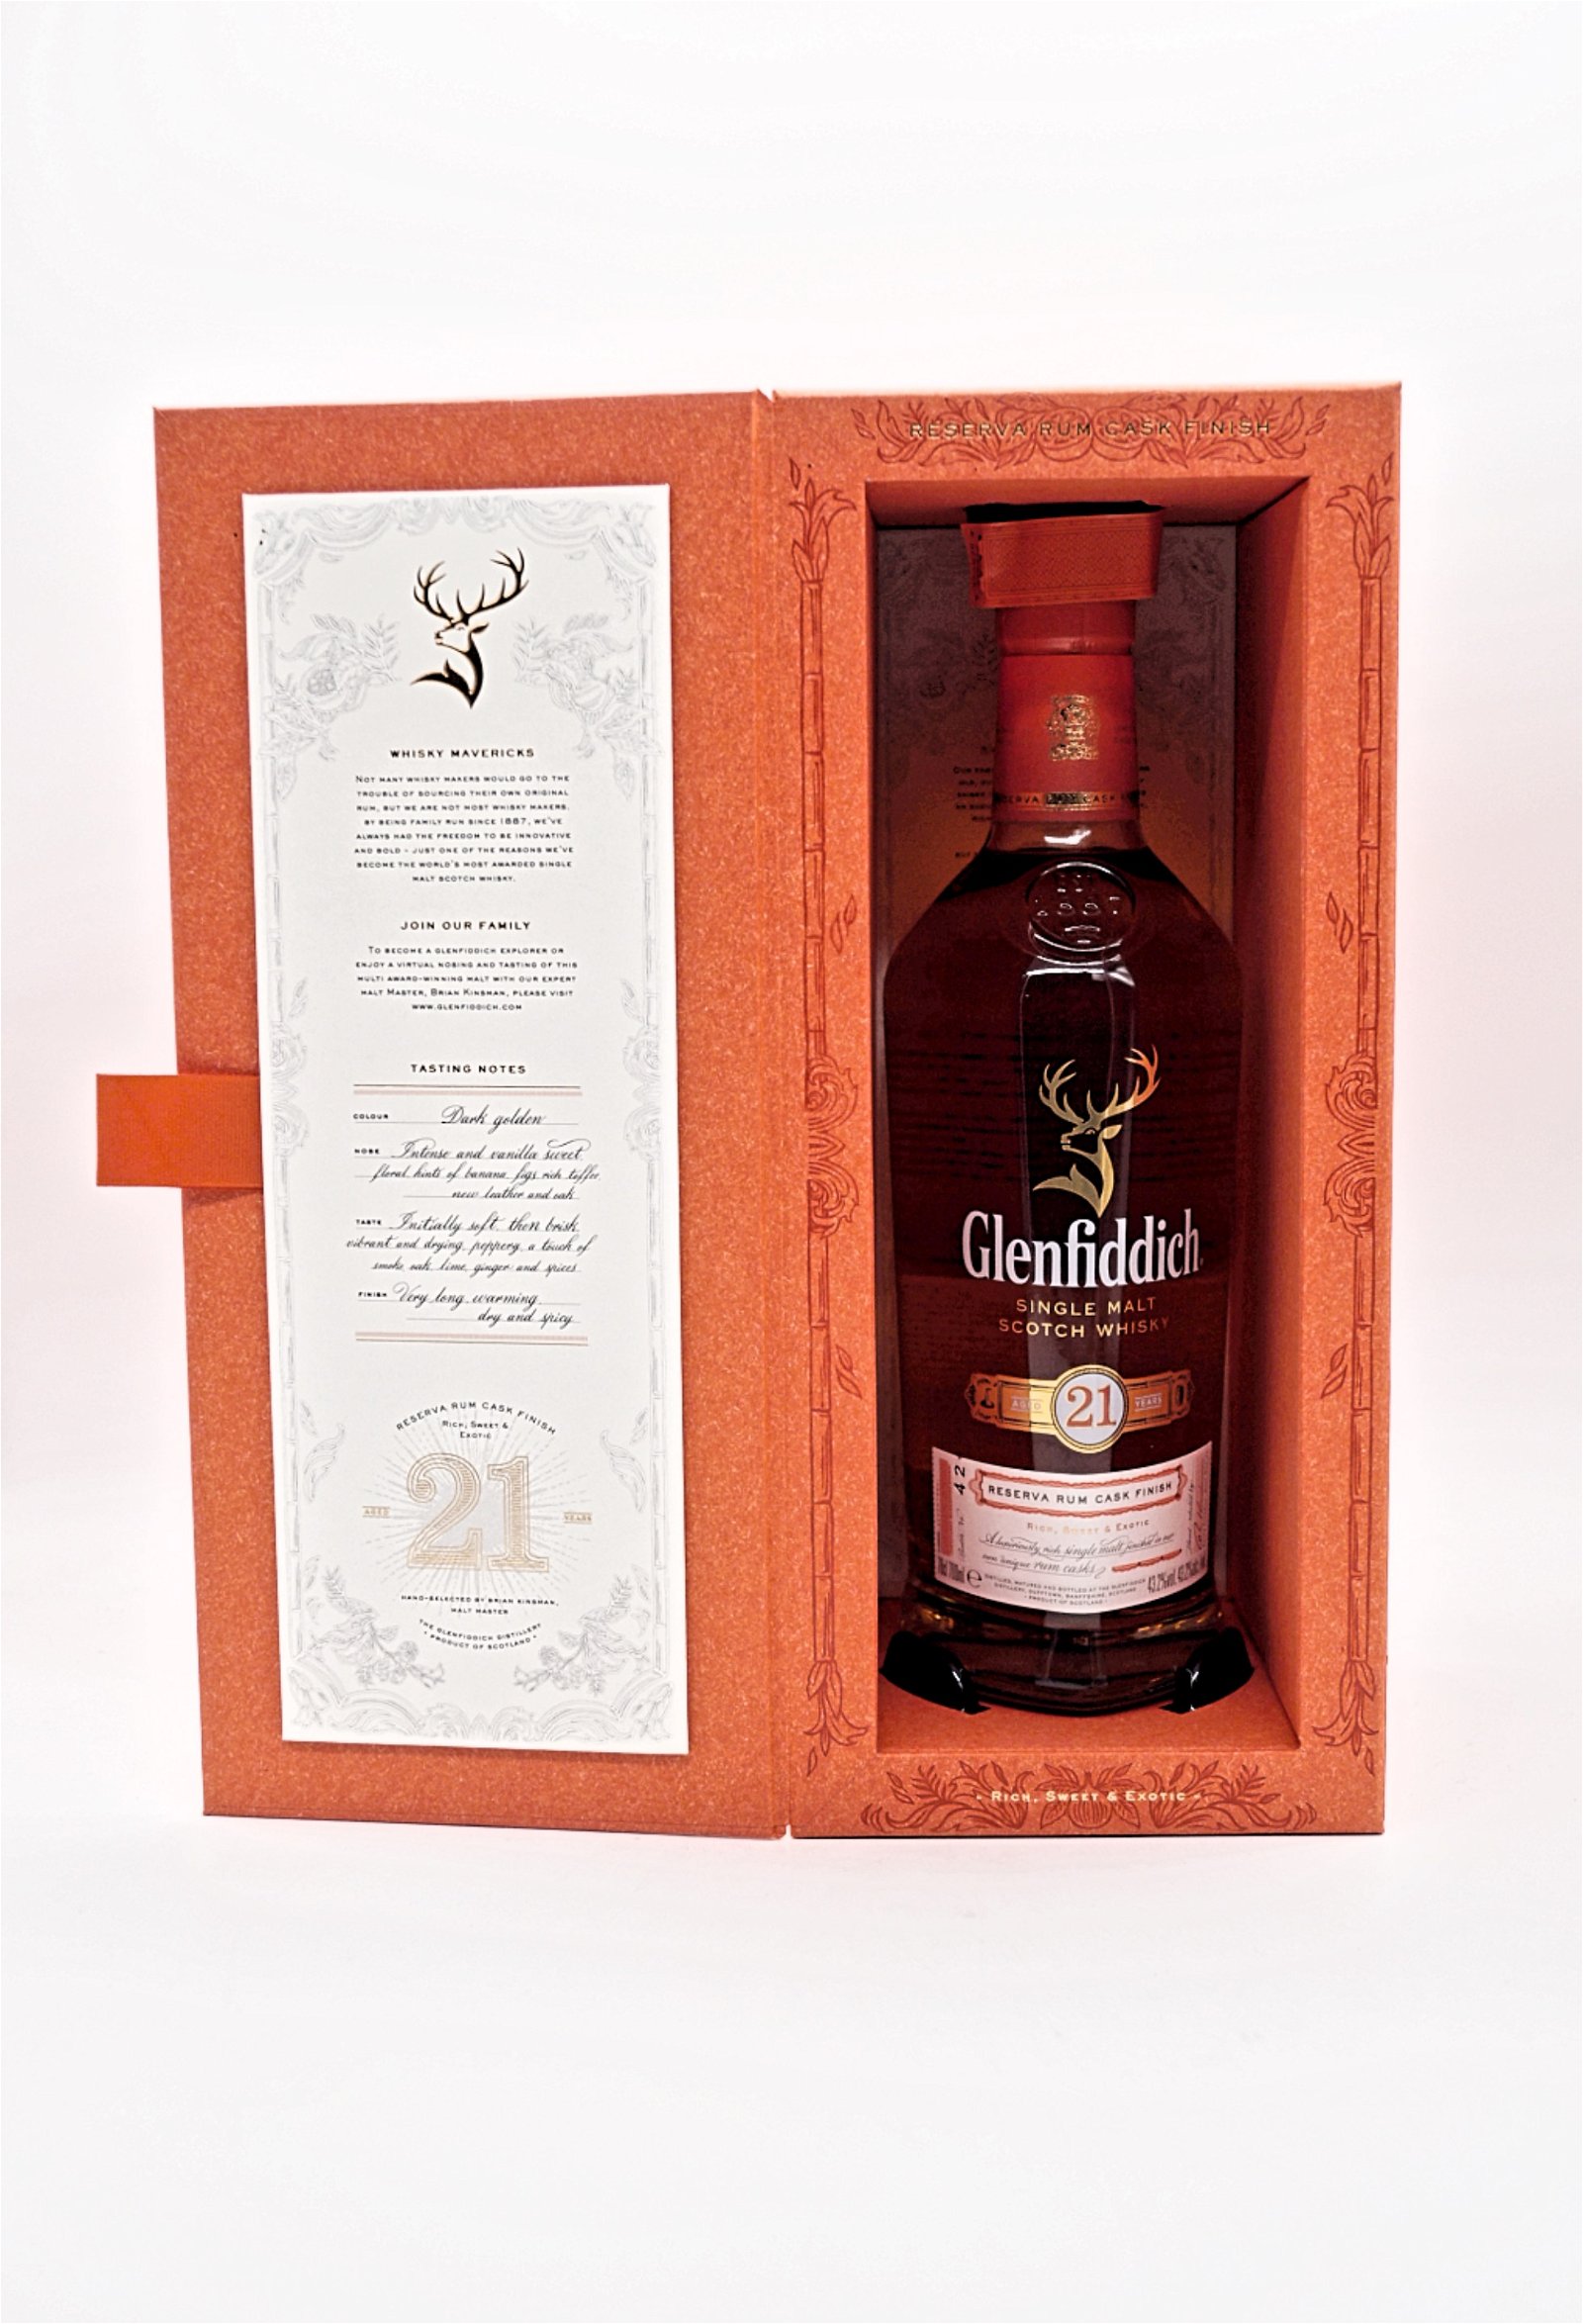 Glenfiddich 21 Jahre Reserva Rum Cask Finish Single Malt Scotch Whisky